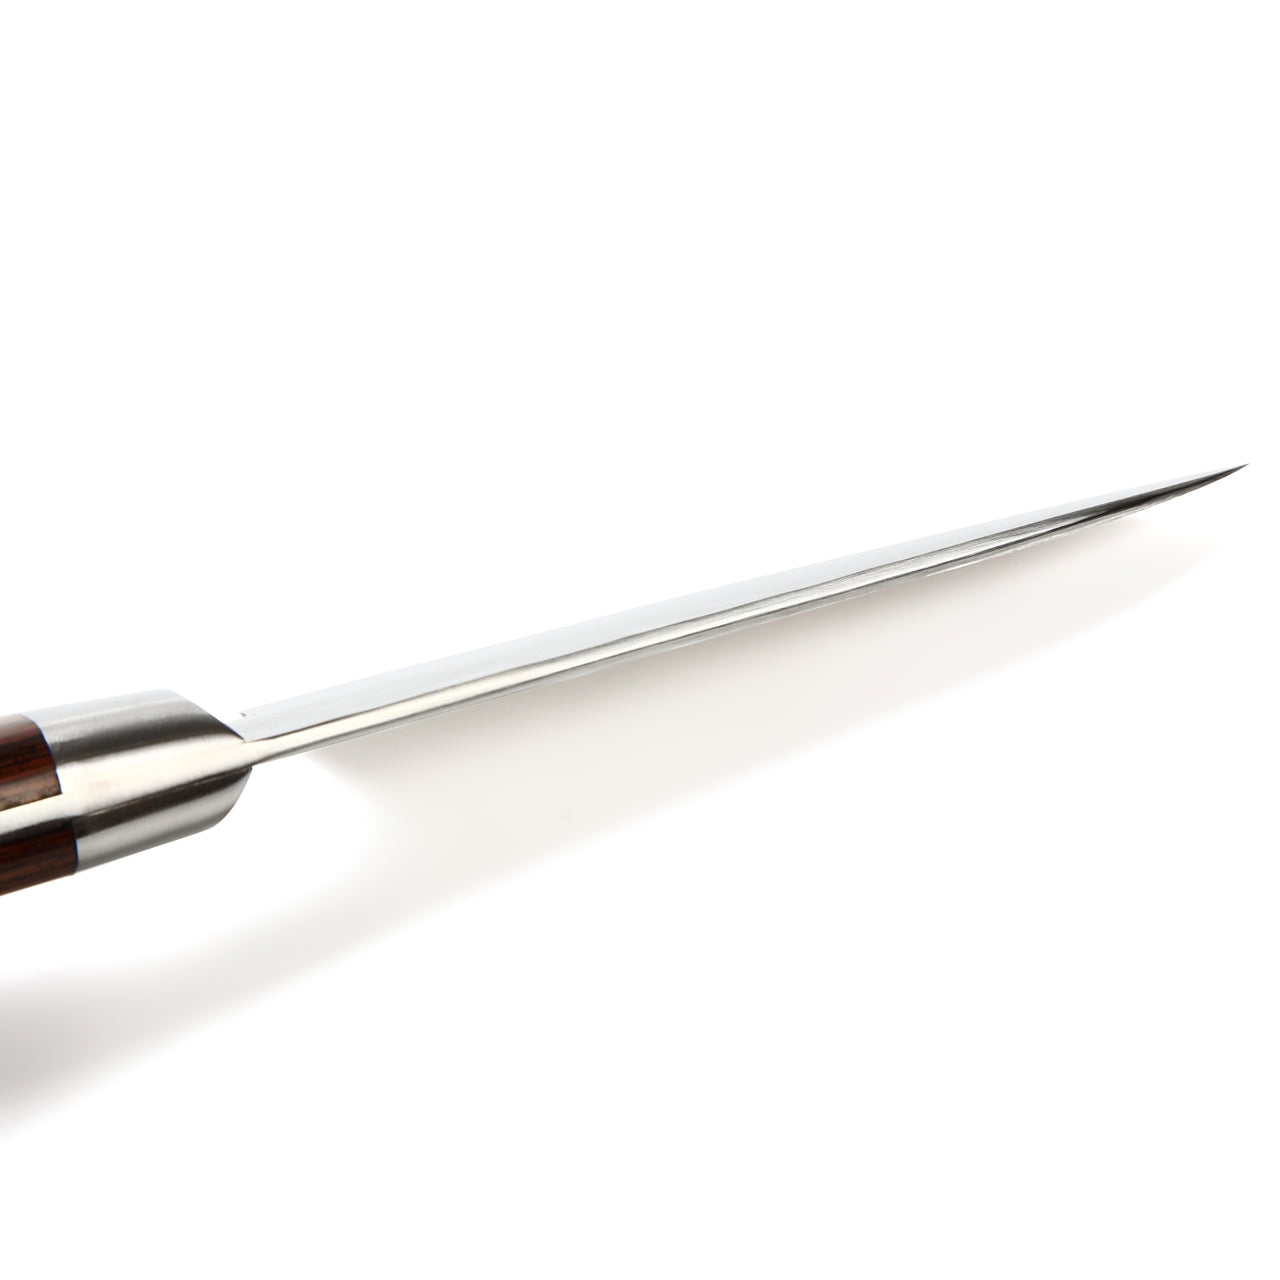 Magnolia Saya Sheath for 80mm Paring Knife with Pin